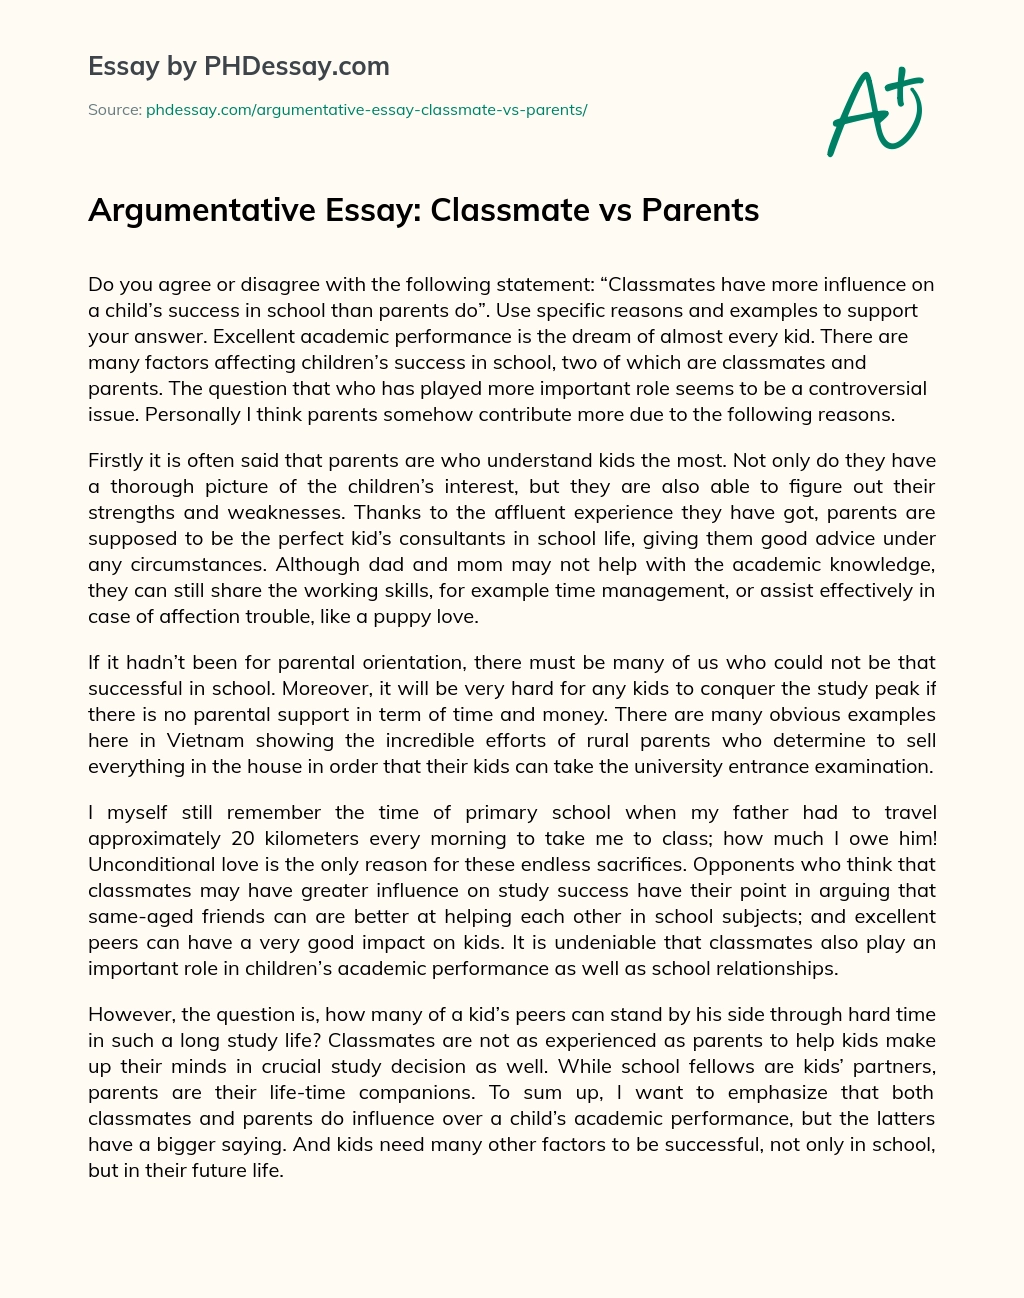 Argumentative Essay: Classmate vs Parents essay